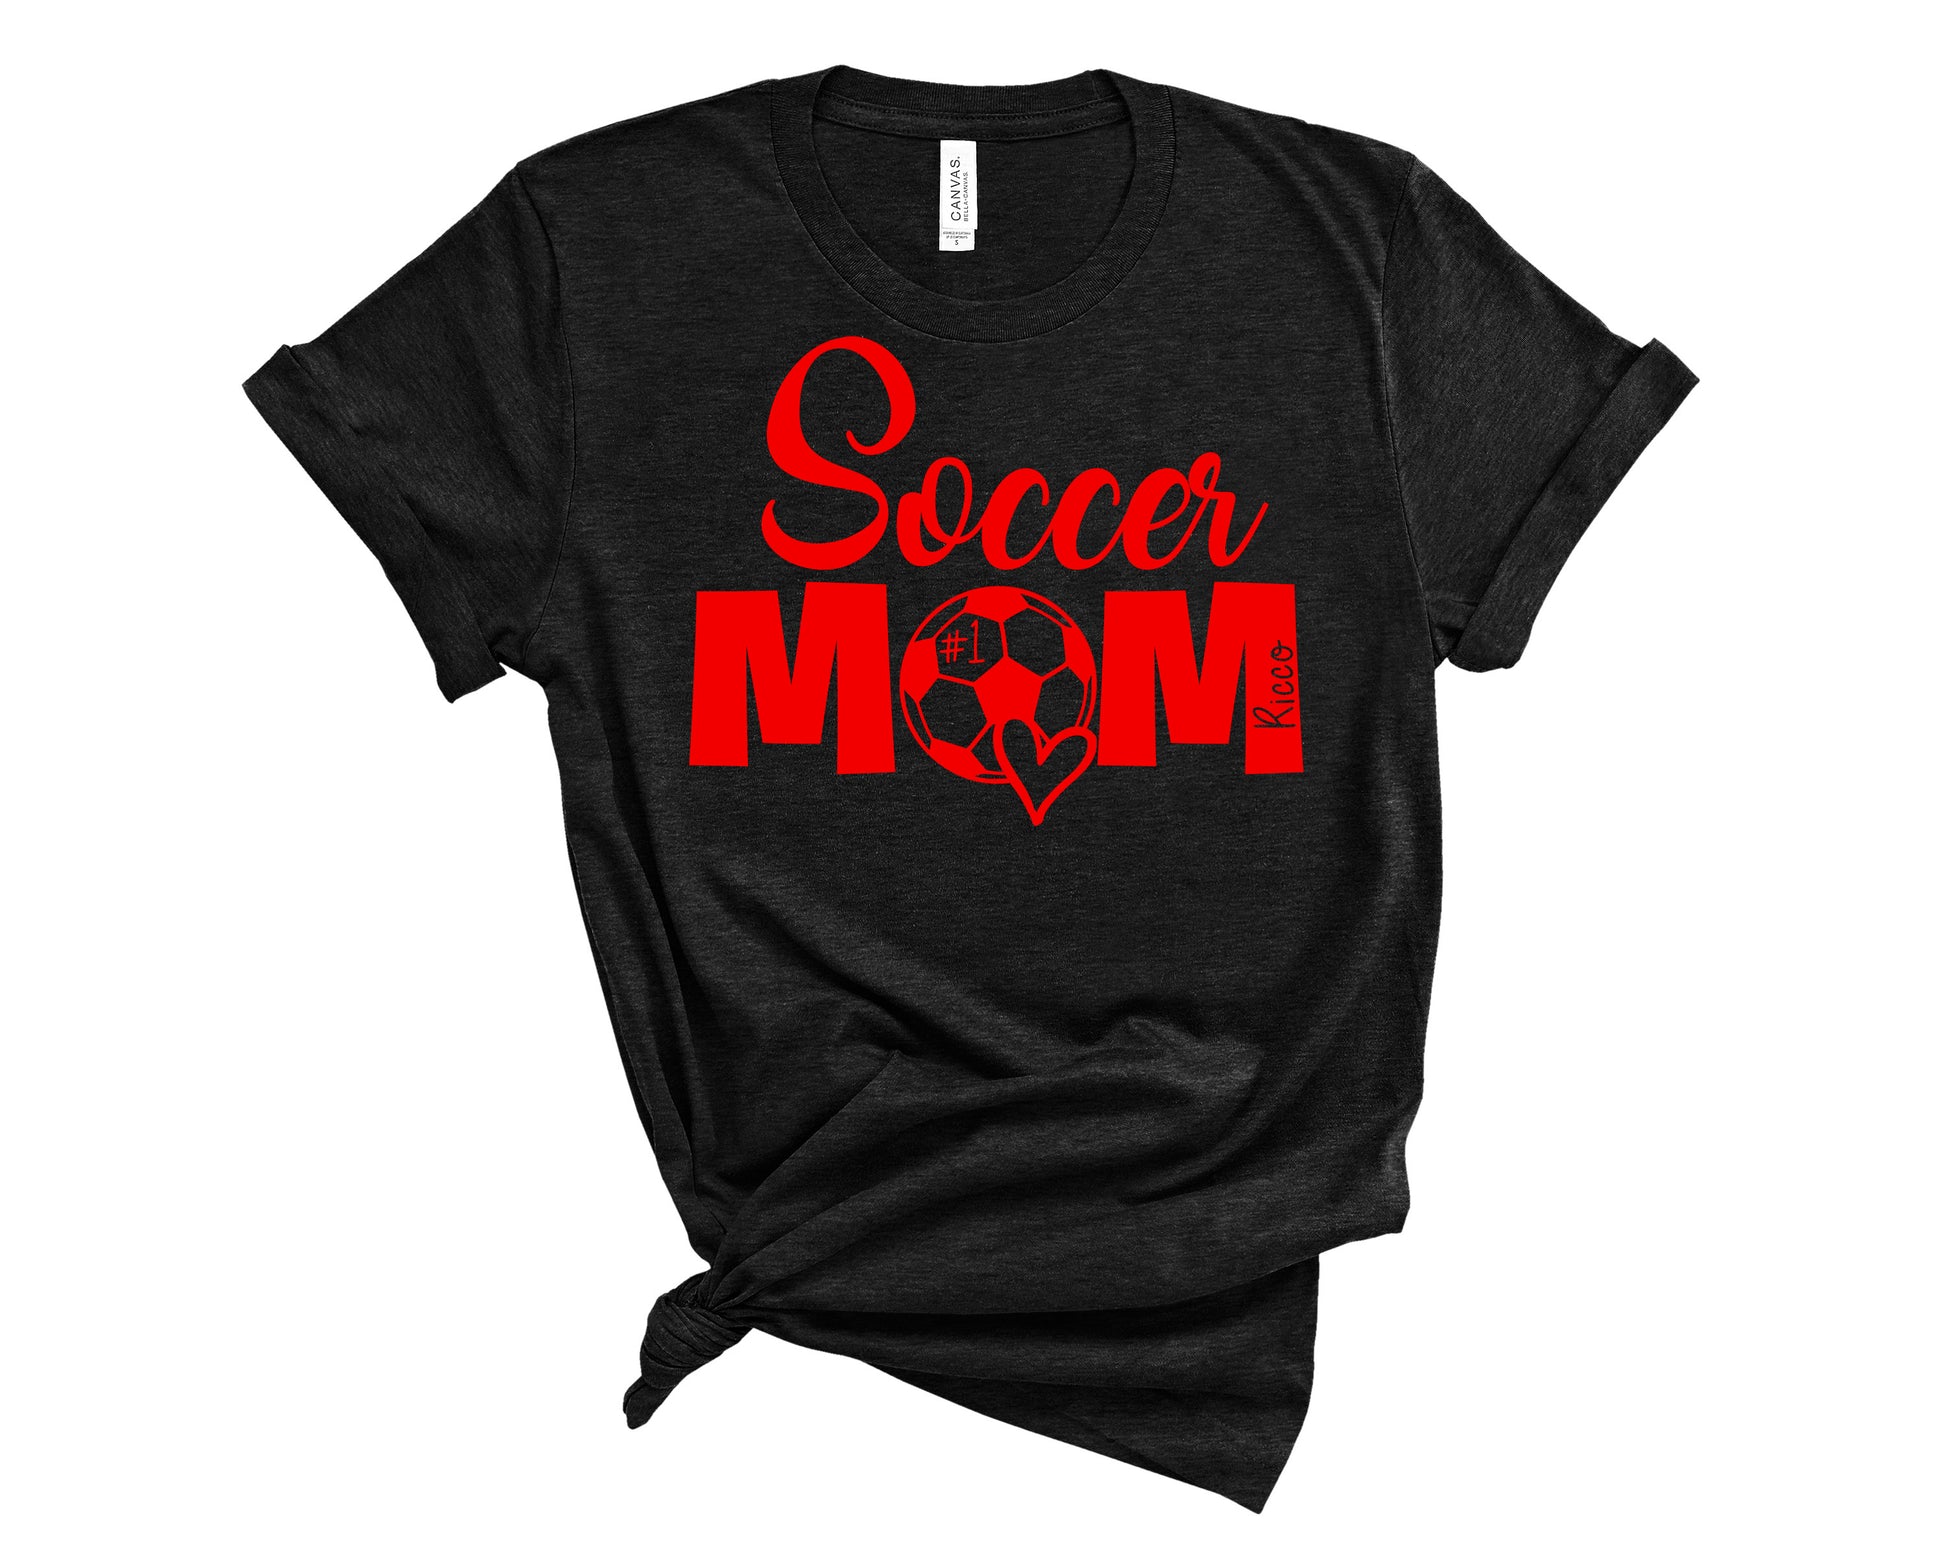 Soccer Mom shirt black